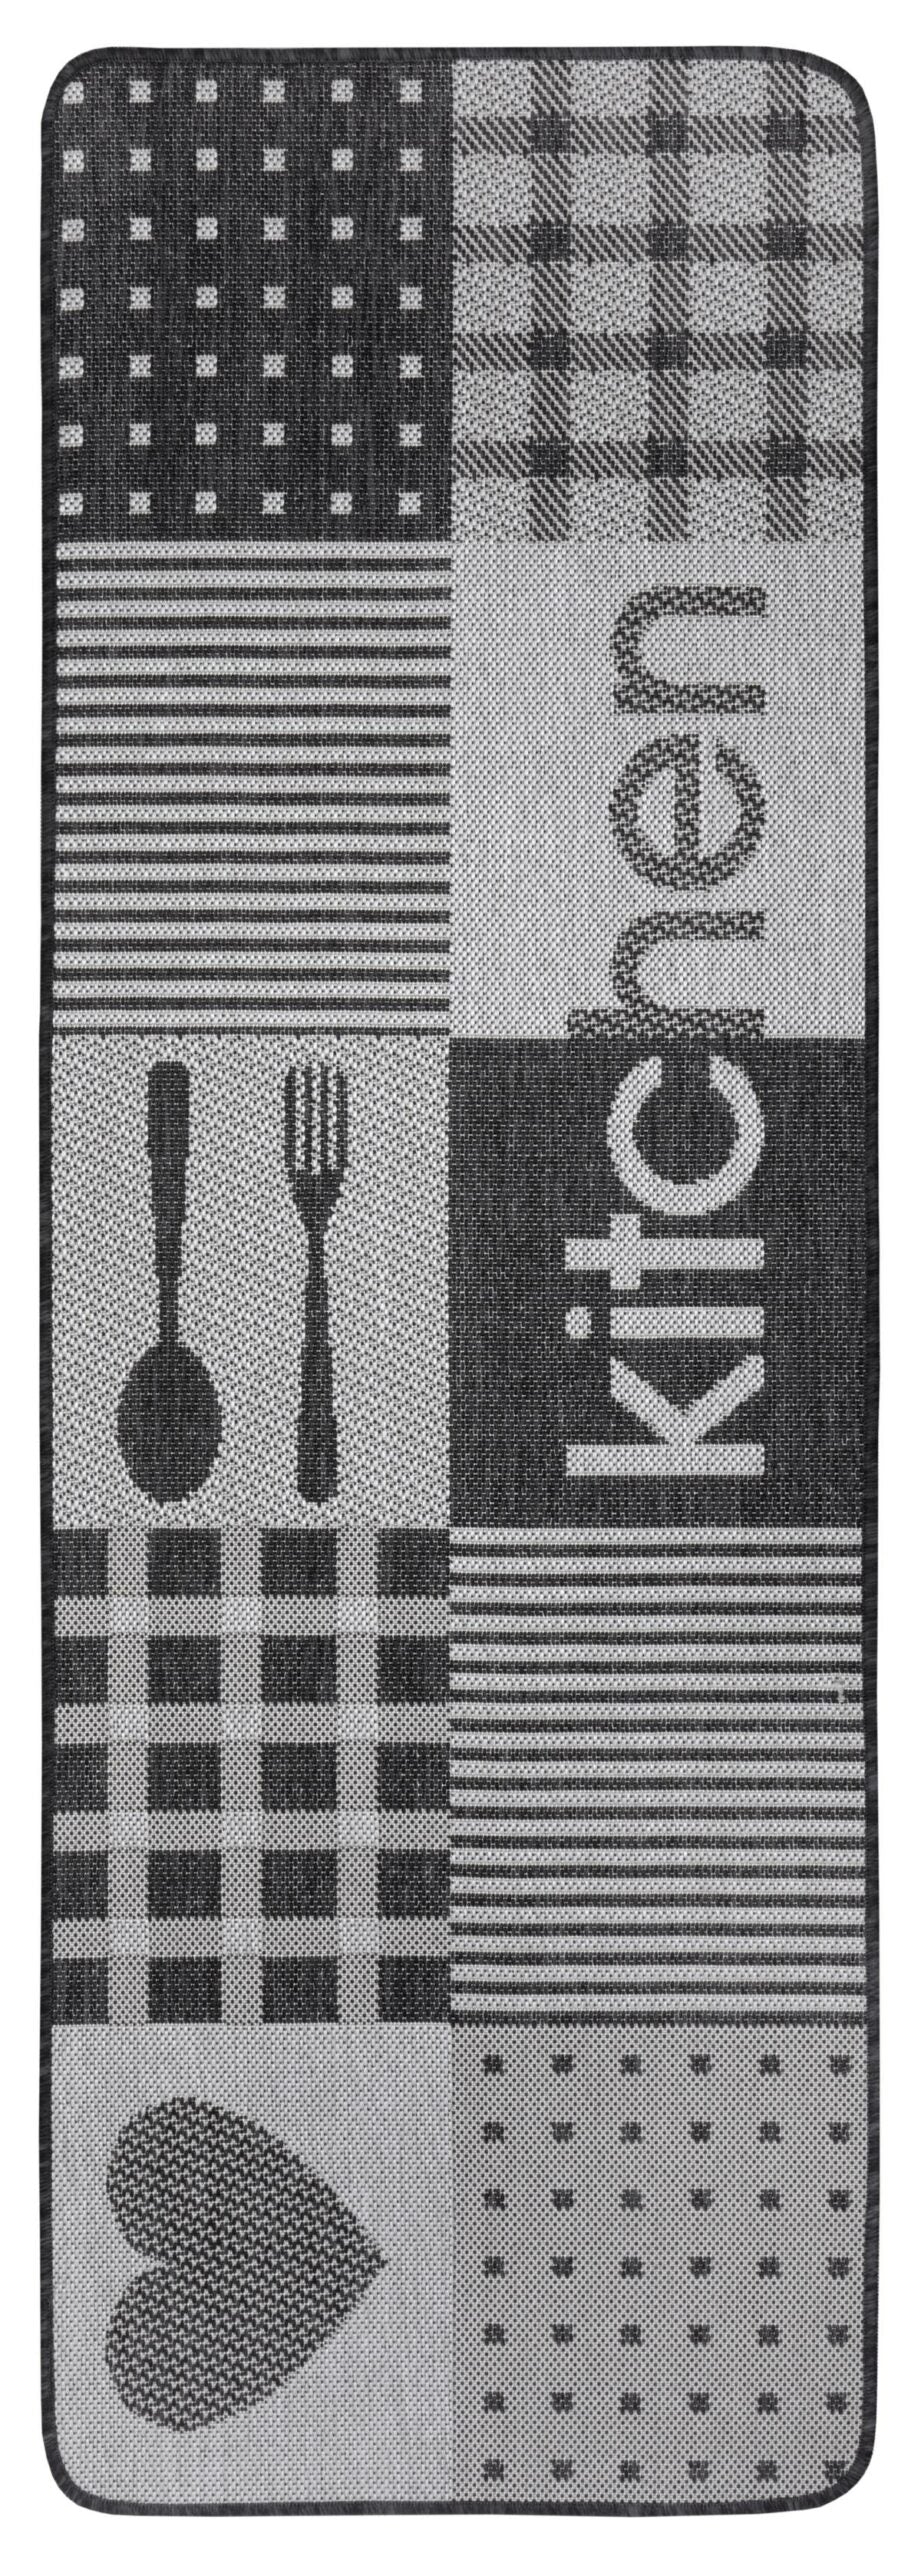 Keukenloper - Kitchy Antraciet/Grijs - Topshot